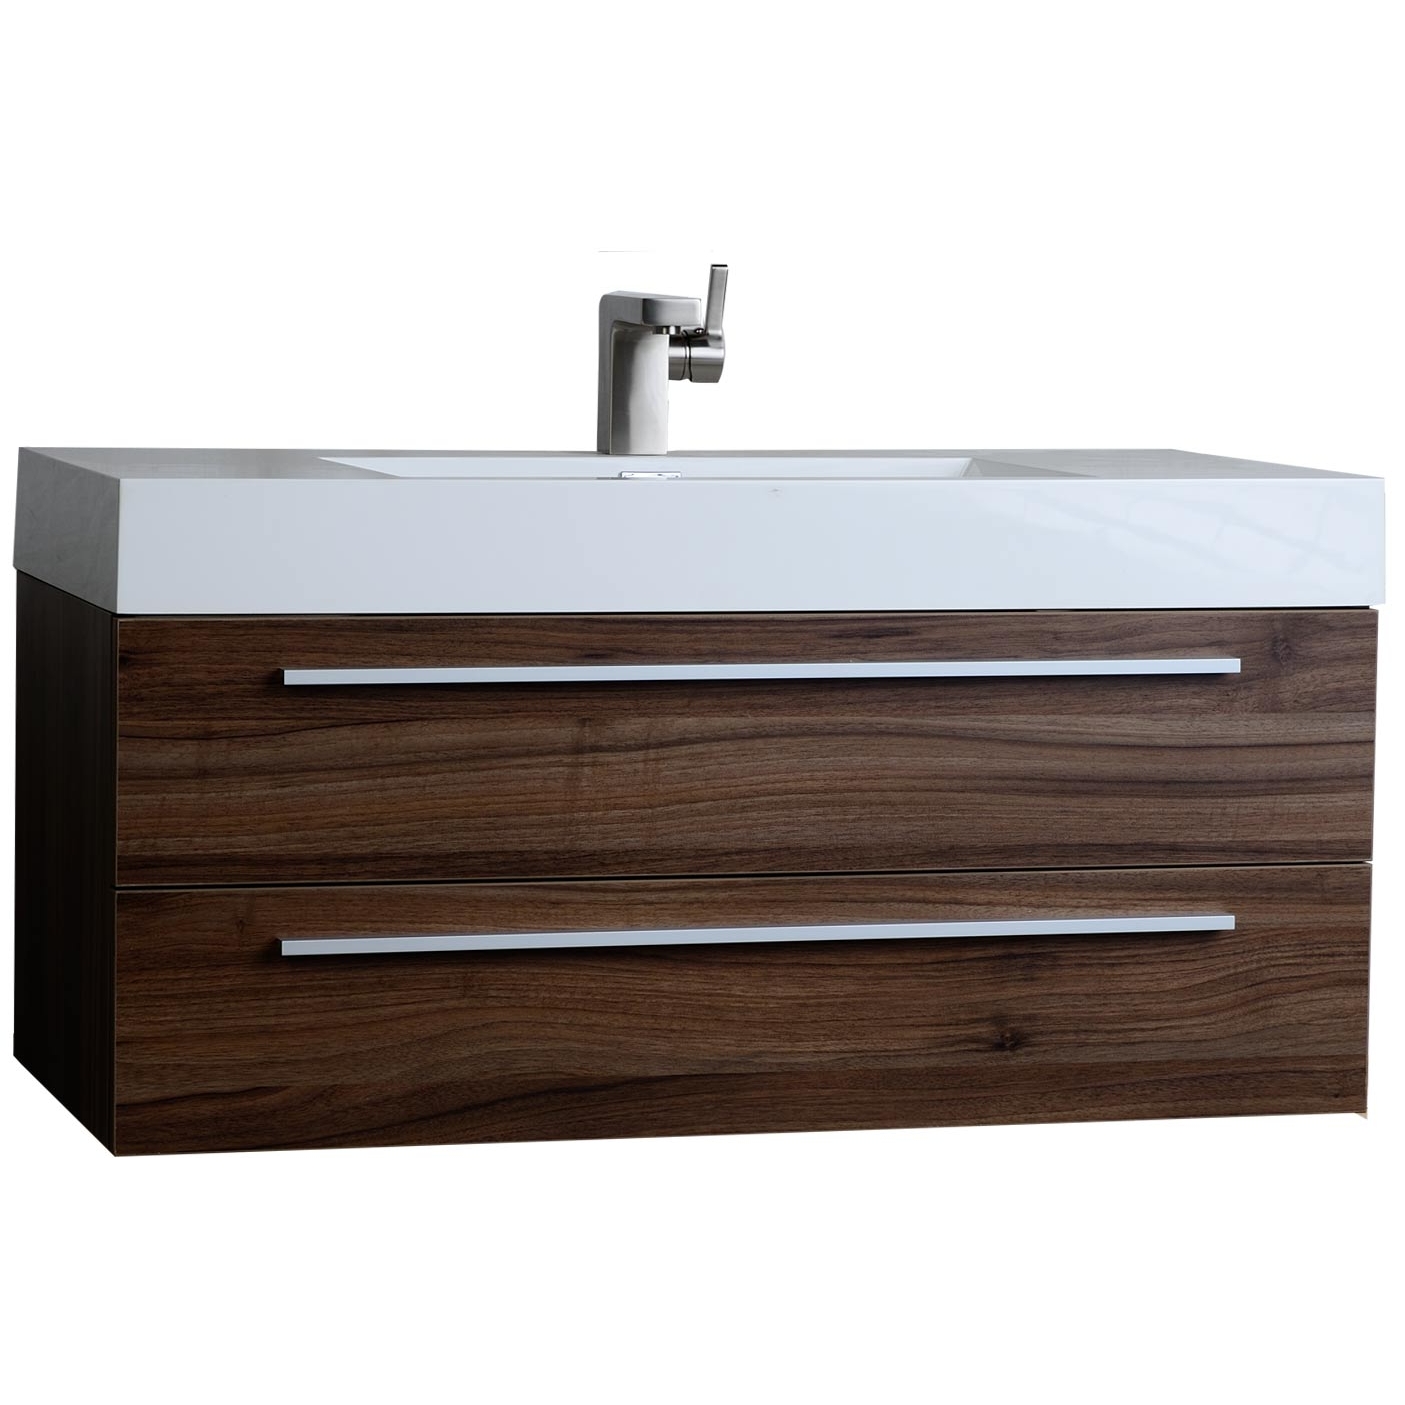 Buy 3925 Inch Contemporary Bathroom Vanity Walnut Tn T1000 Wn On Conceptbathscom